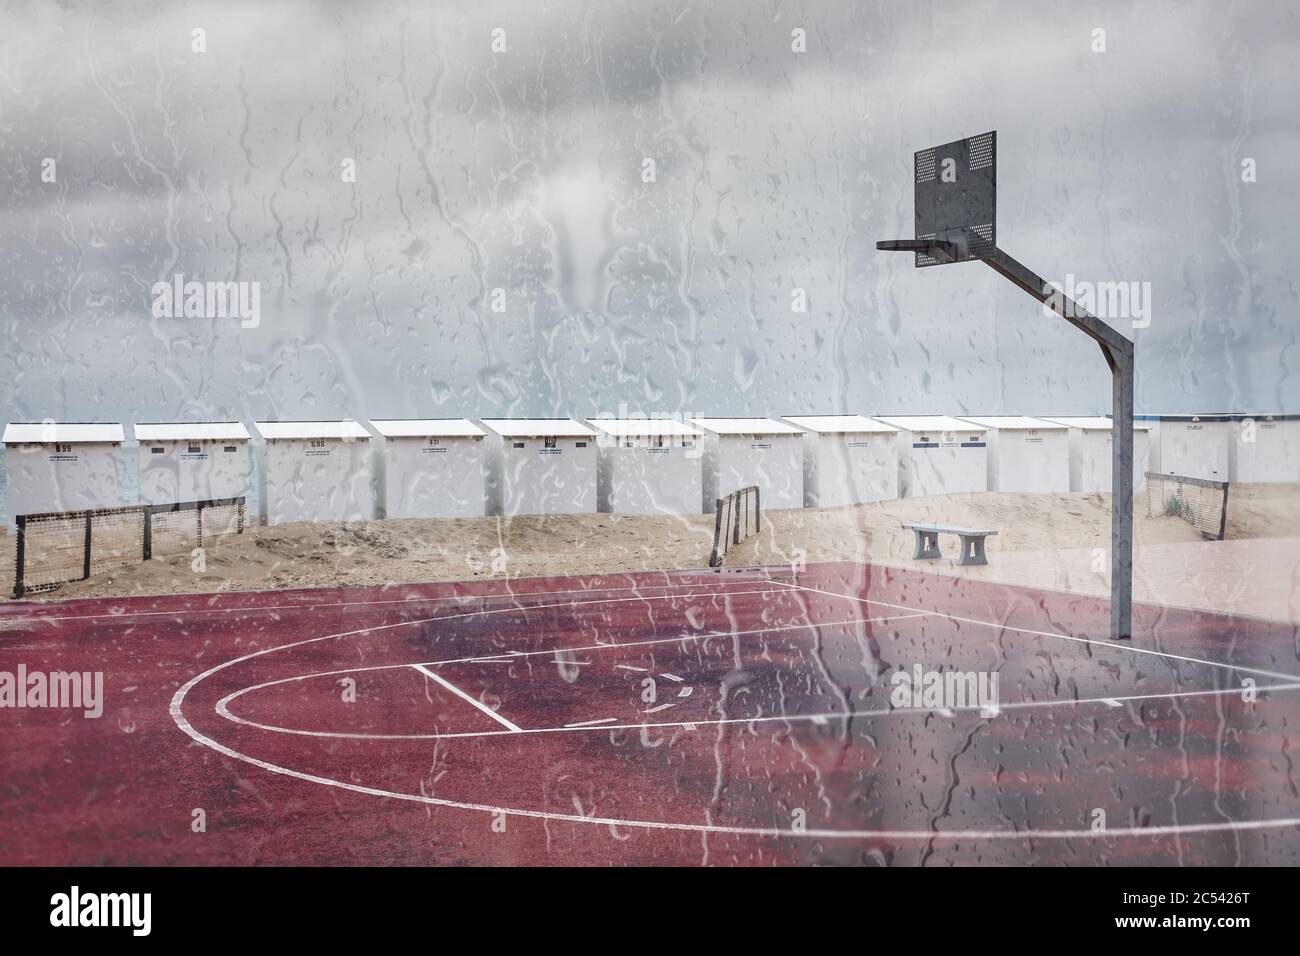 Beach basketball pitch seen through rainy window of a cafe Stock Photo